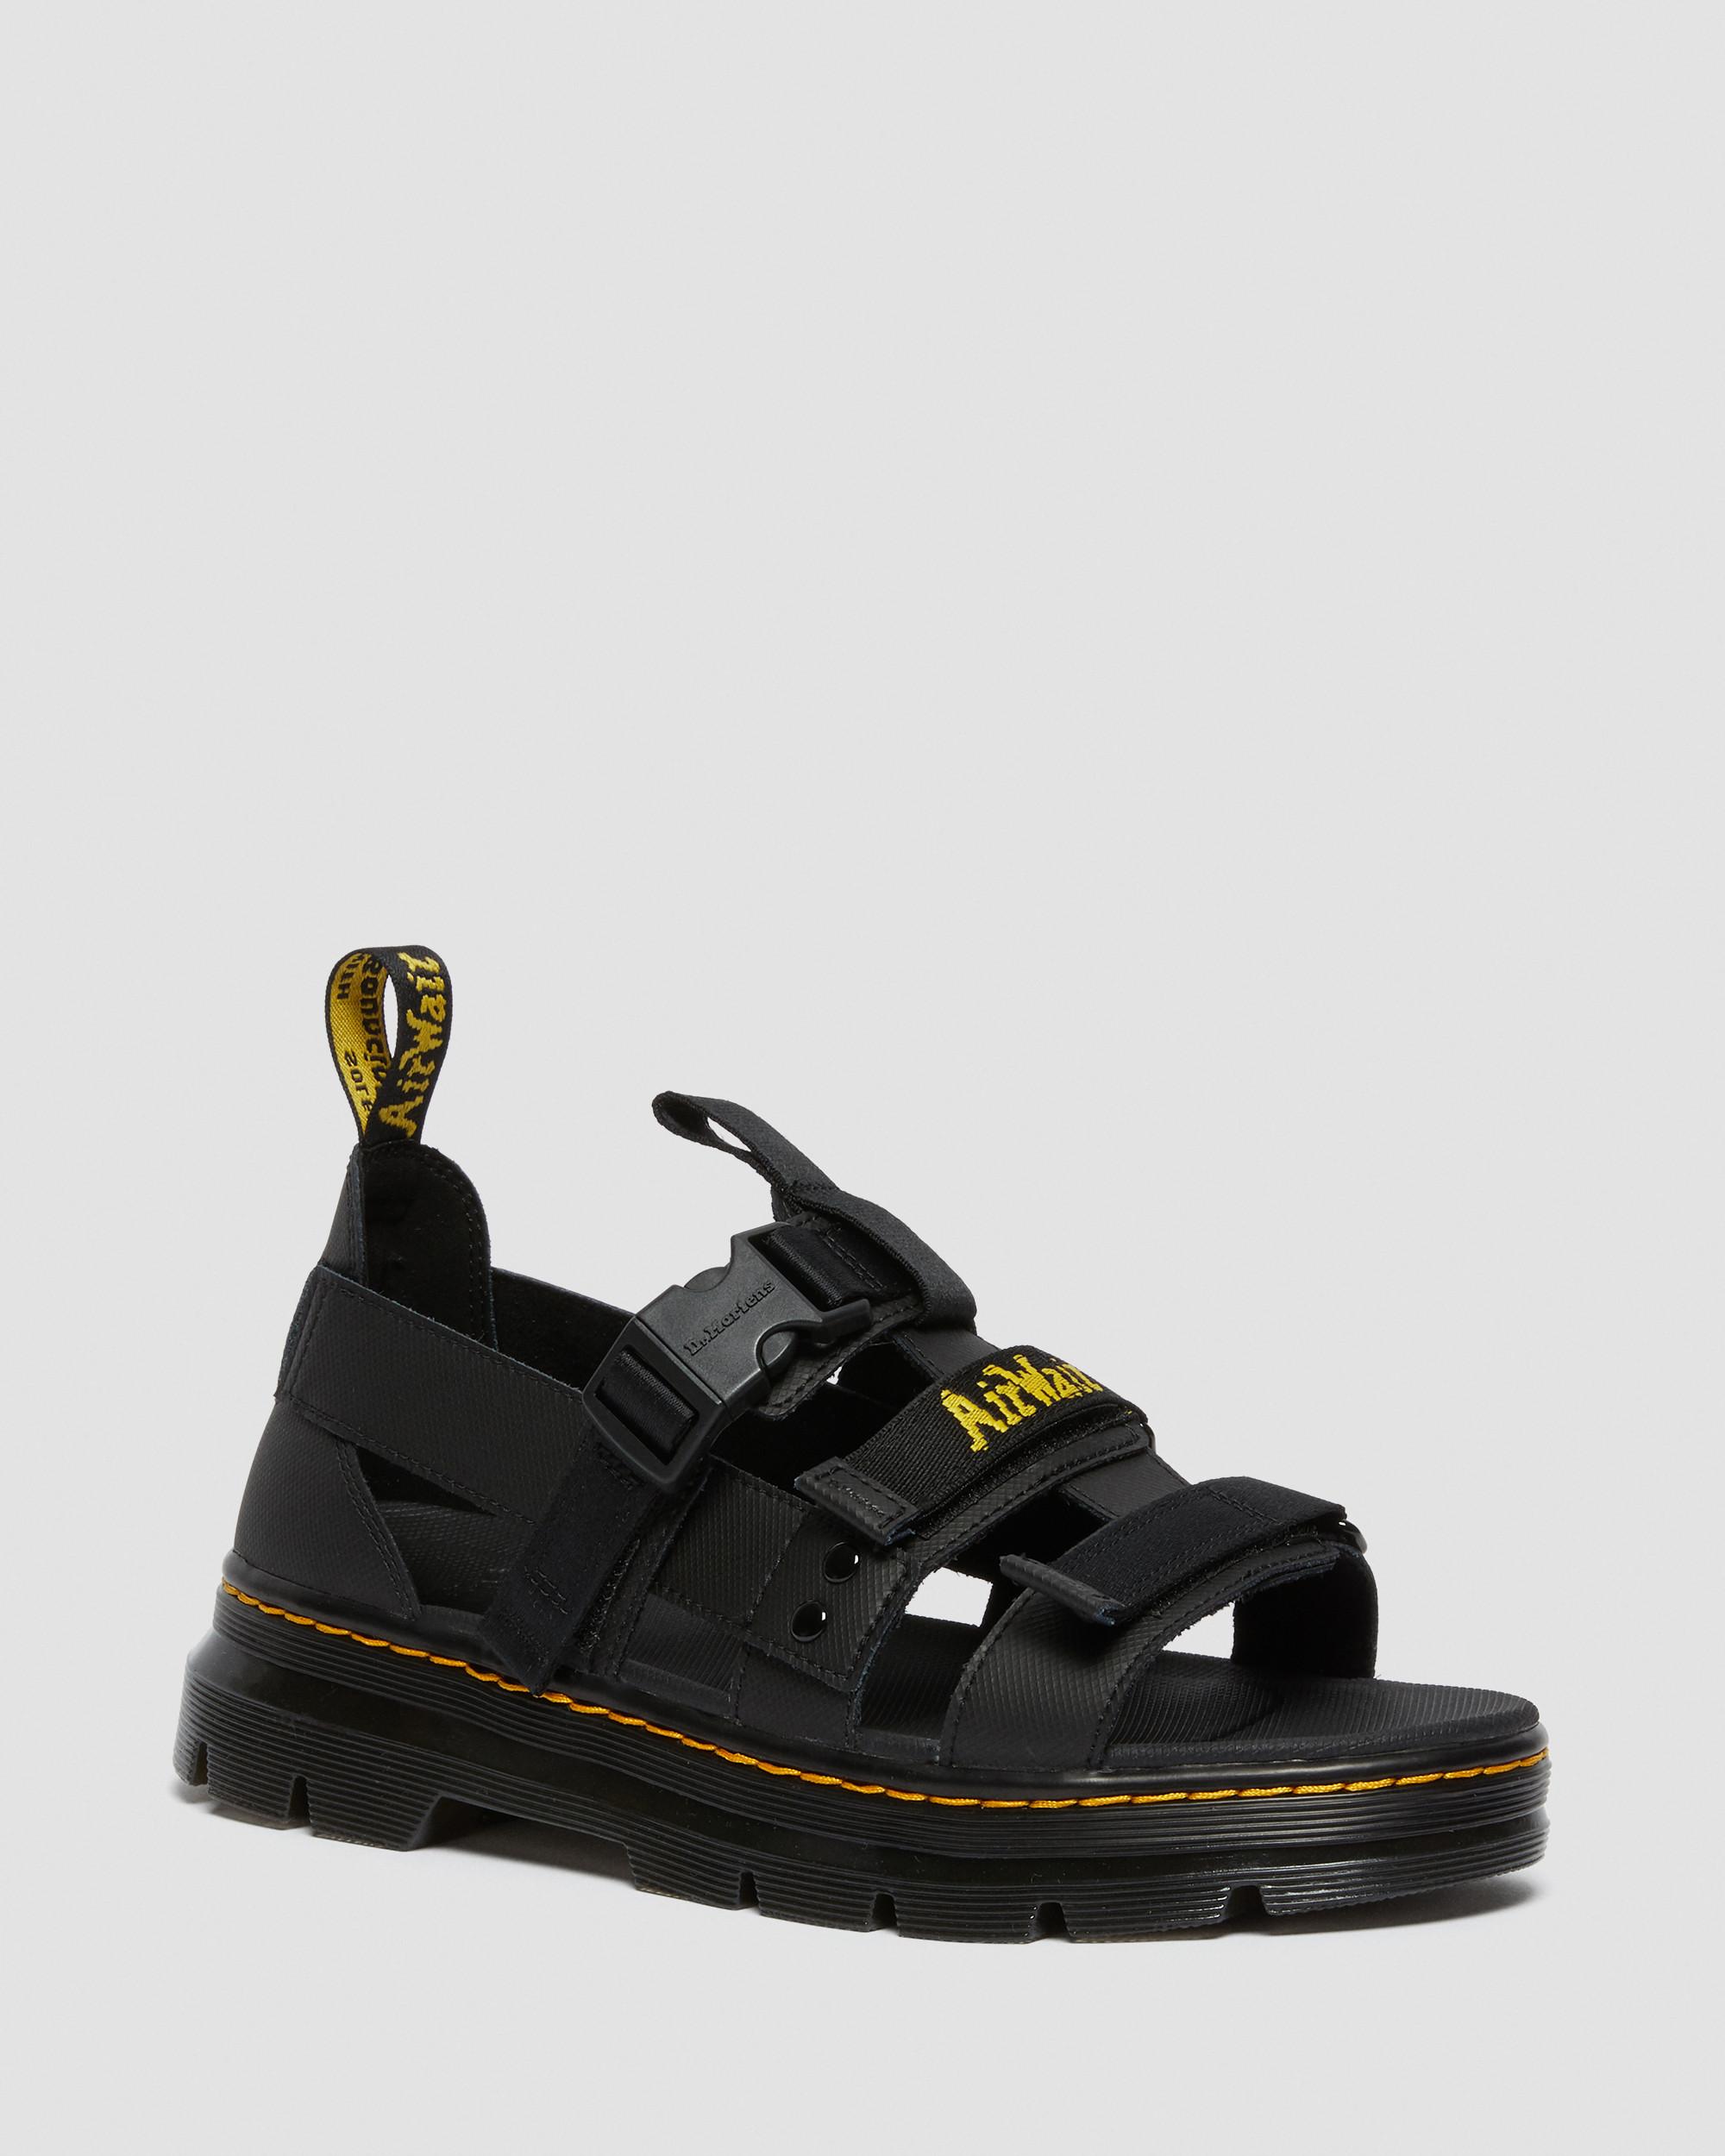 Pearson Strap Webbing Sandals, Black | Dr. Martens